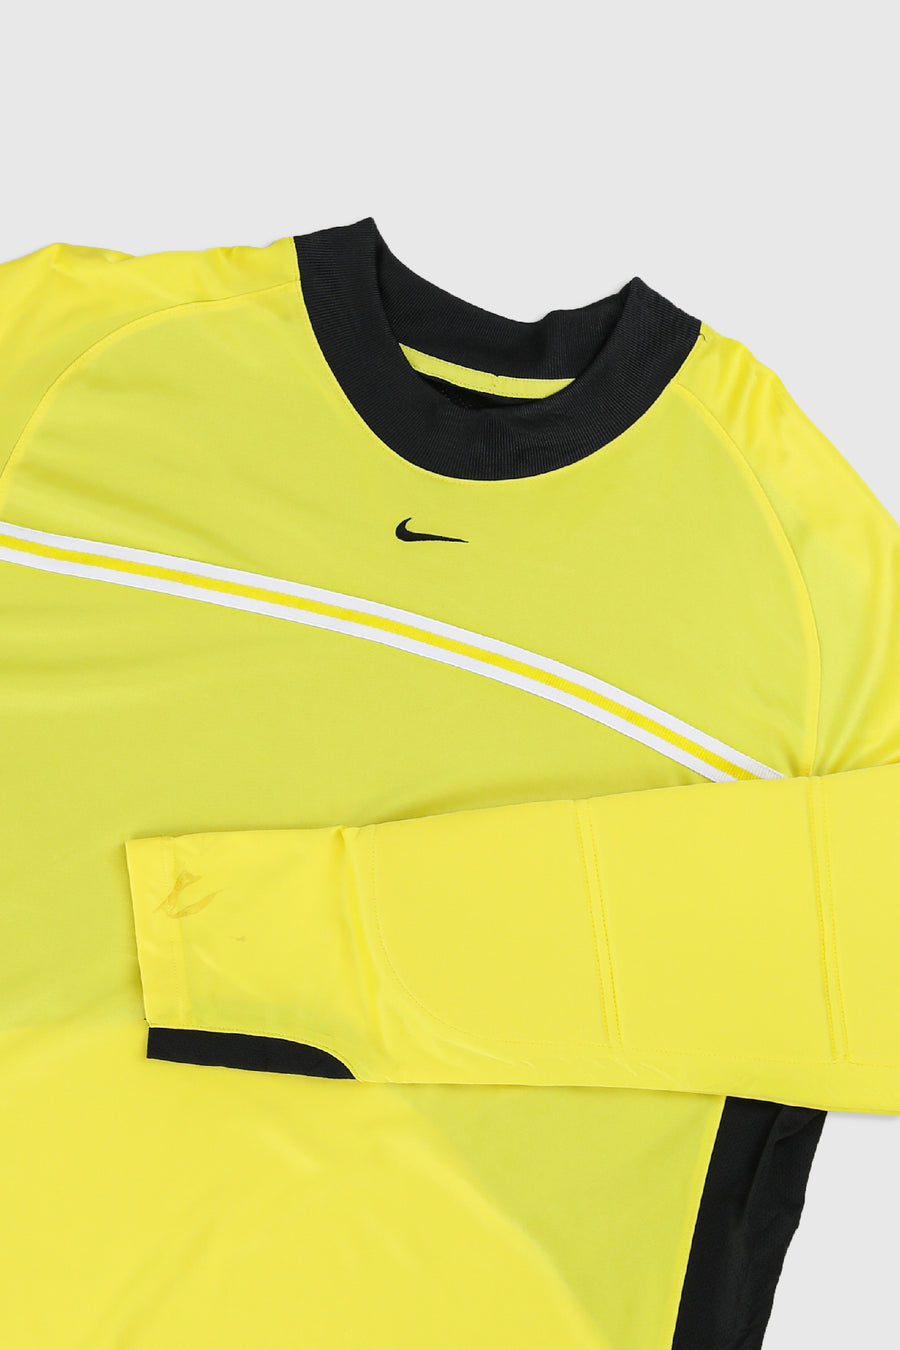 Vintage Nike Long Sleeve Jersey